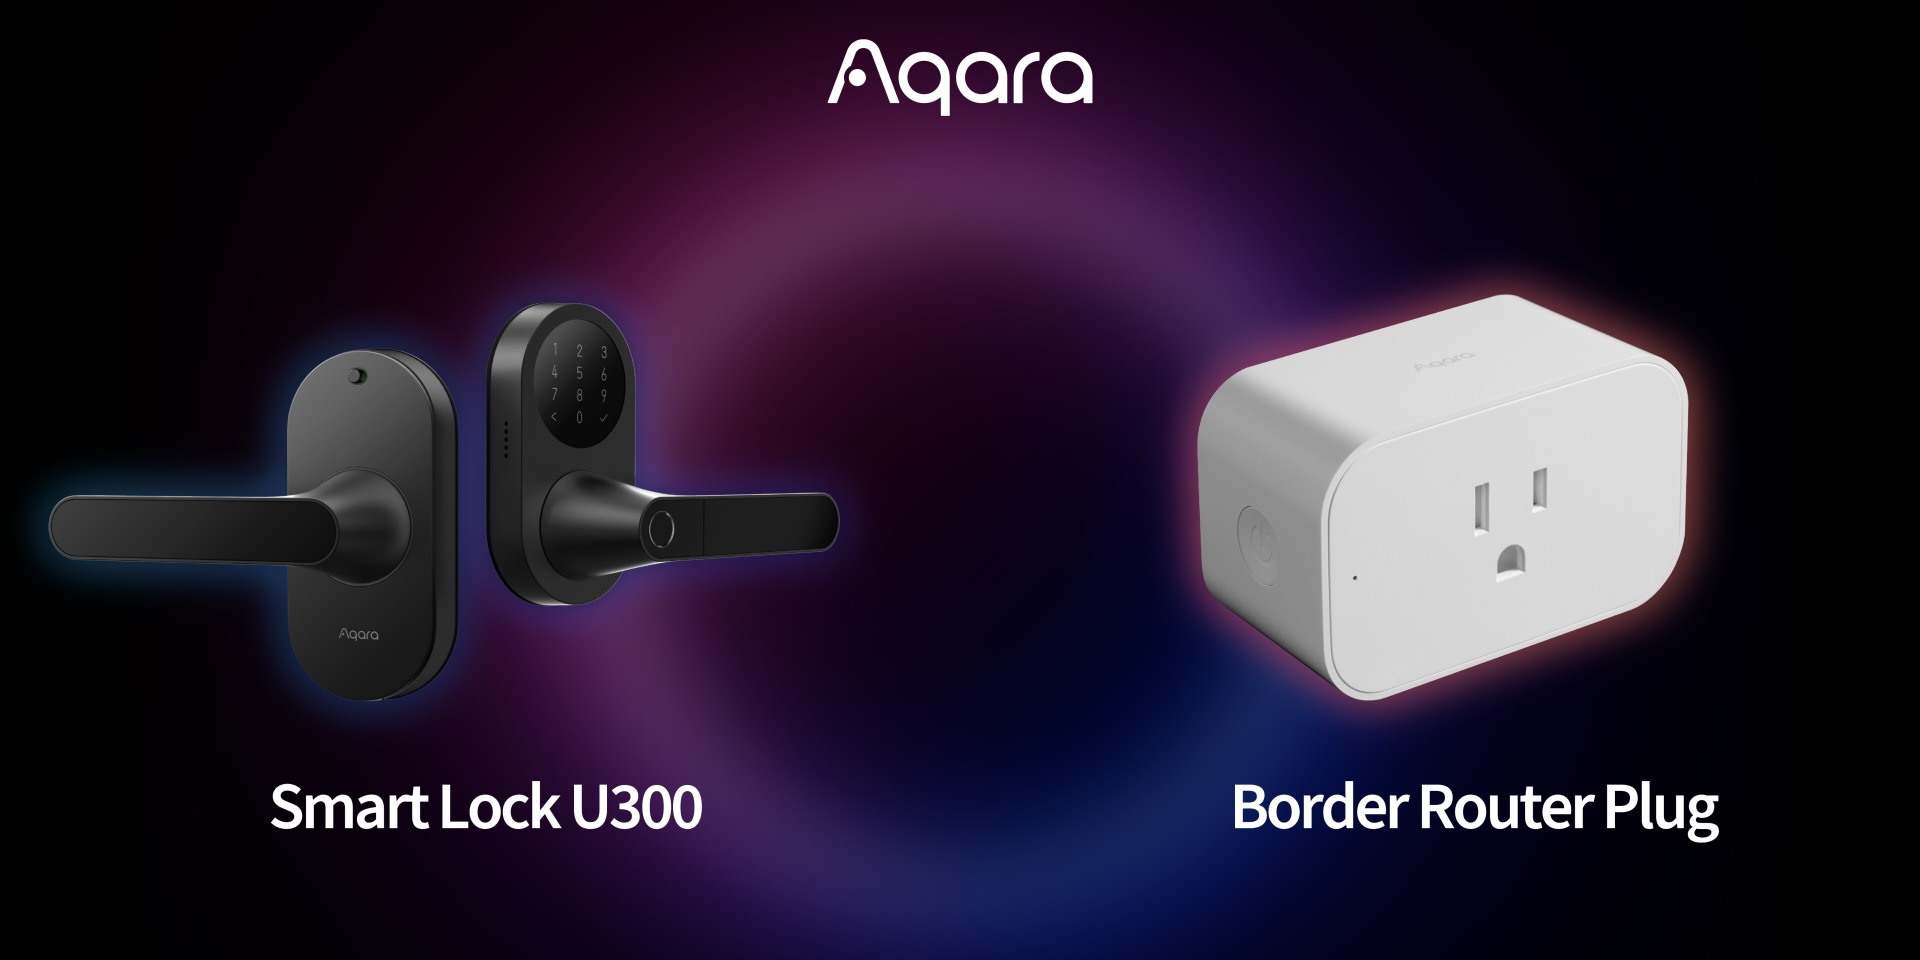 Aqara devices in smart homes begin jump to Matter standard